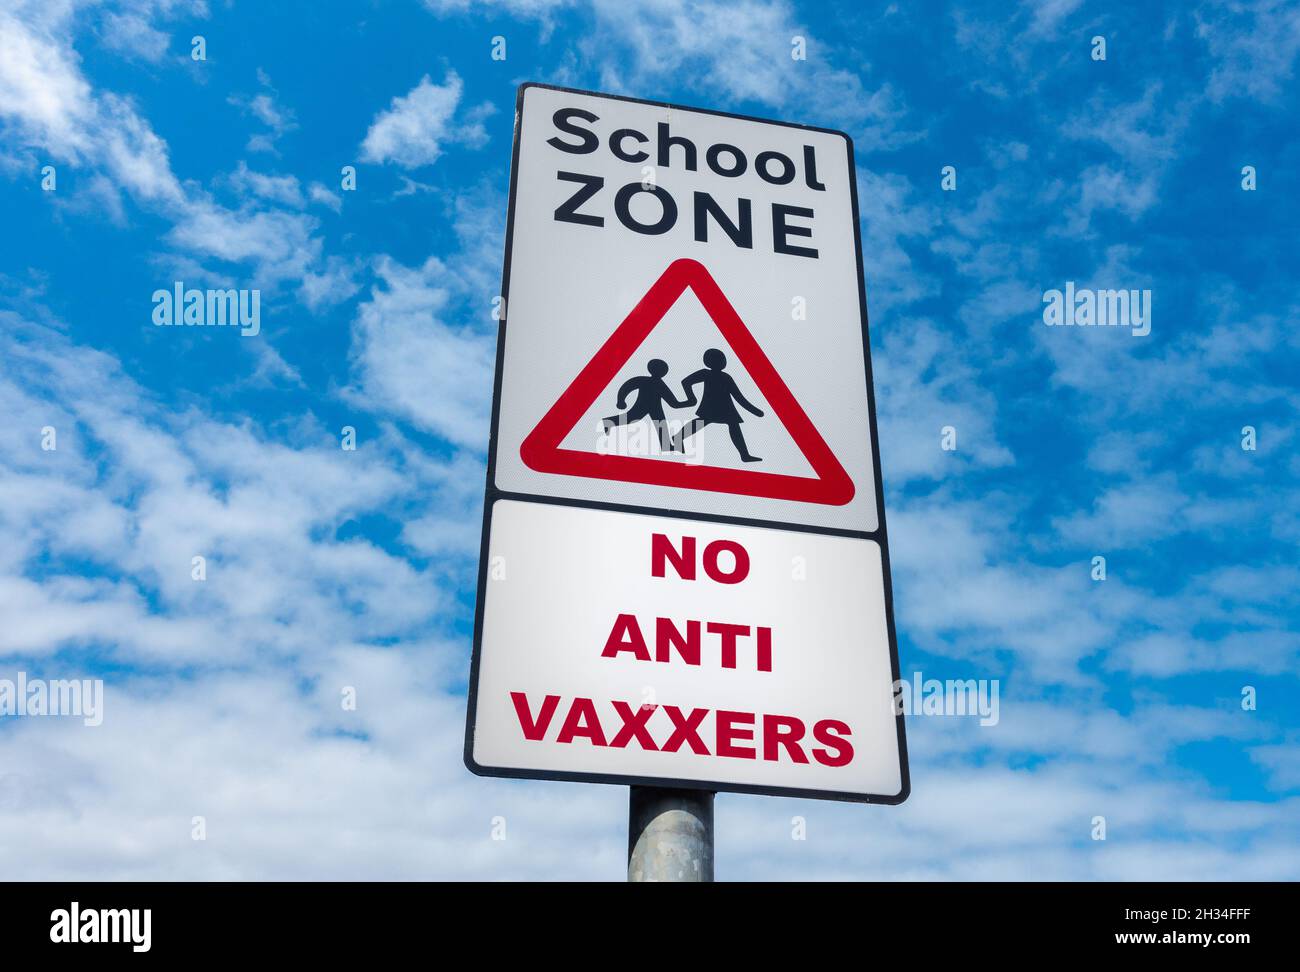 No anti vaxxers on school zone sign. Anti Covid, coronavirus vaccine, vaccination concept image Stock Photo